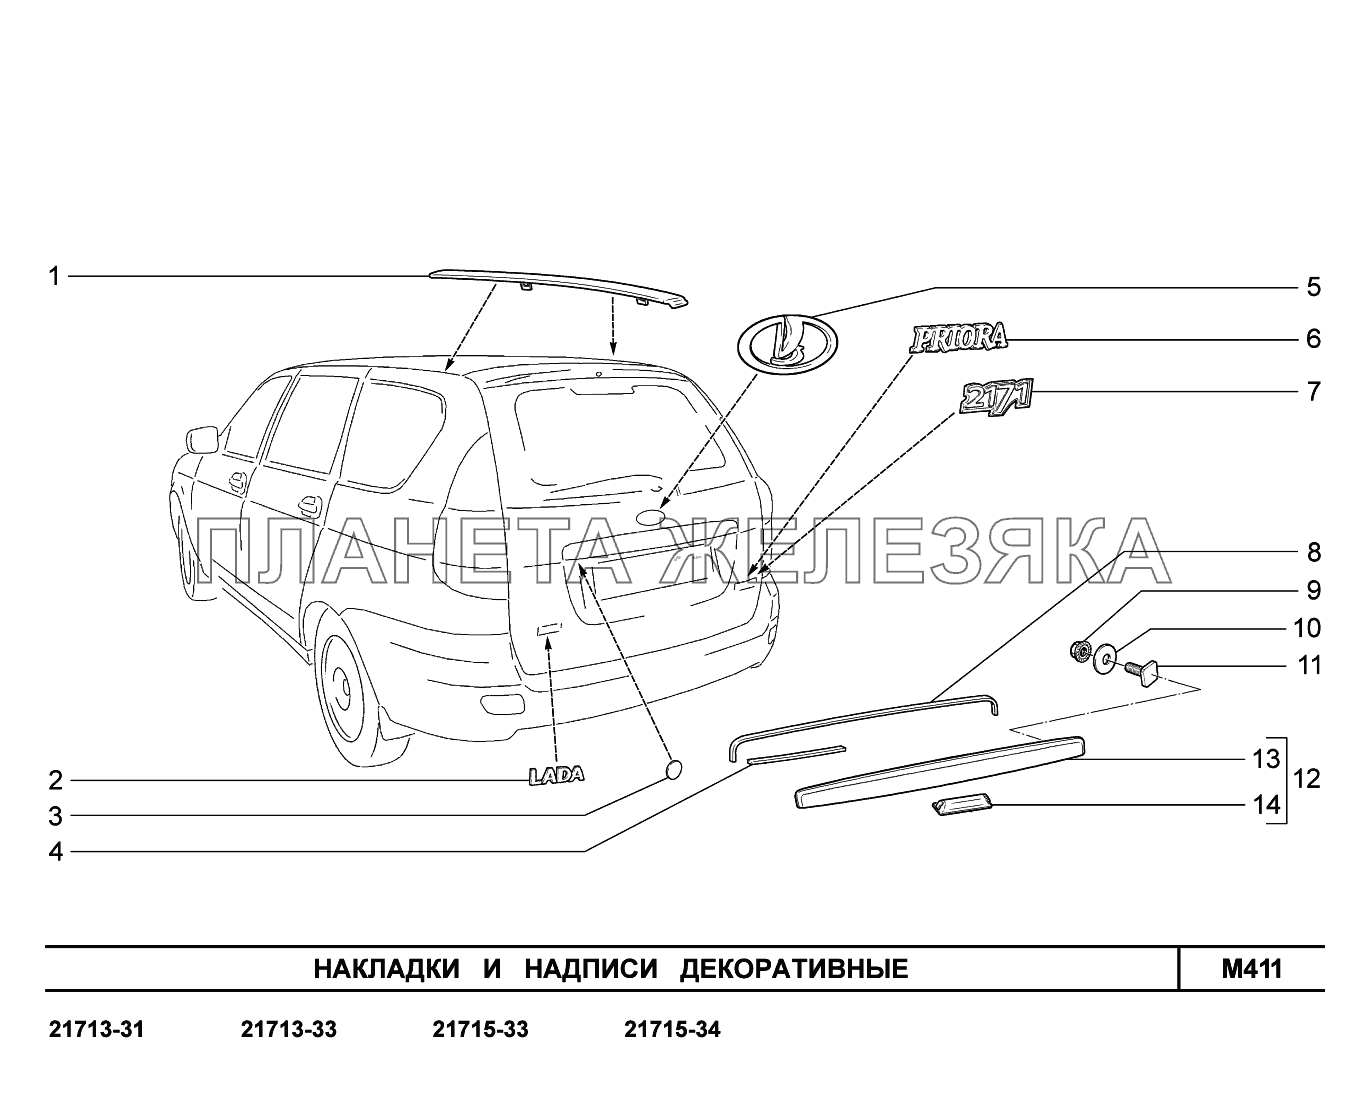 M411. Накладки и надписи декоративные ВАЗ-2170 